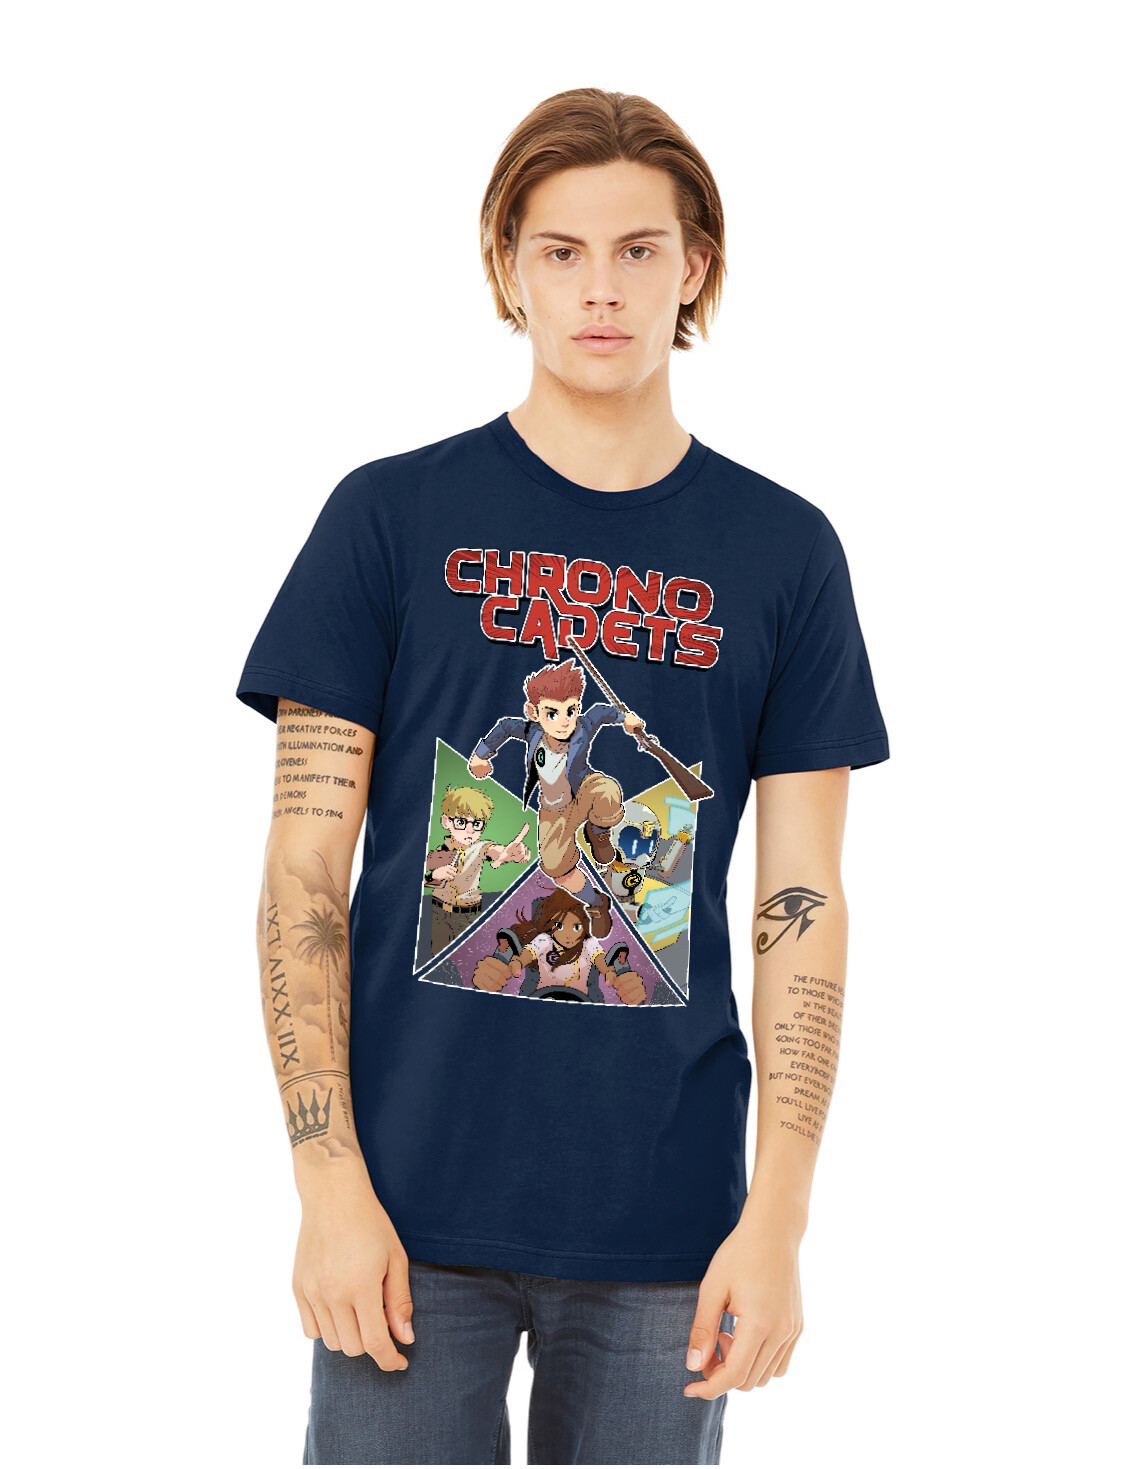 Chrono Cadets T-Shirt